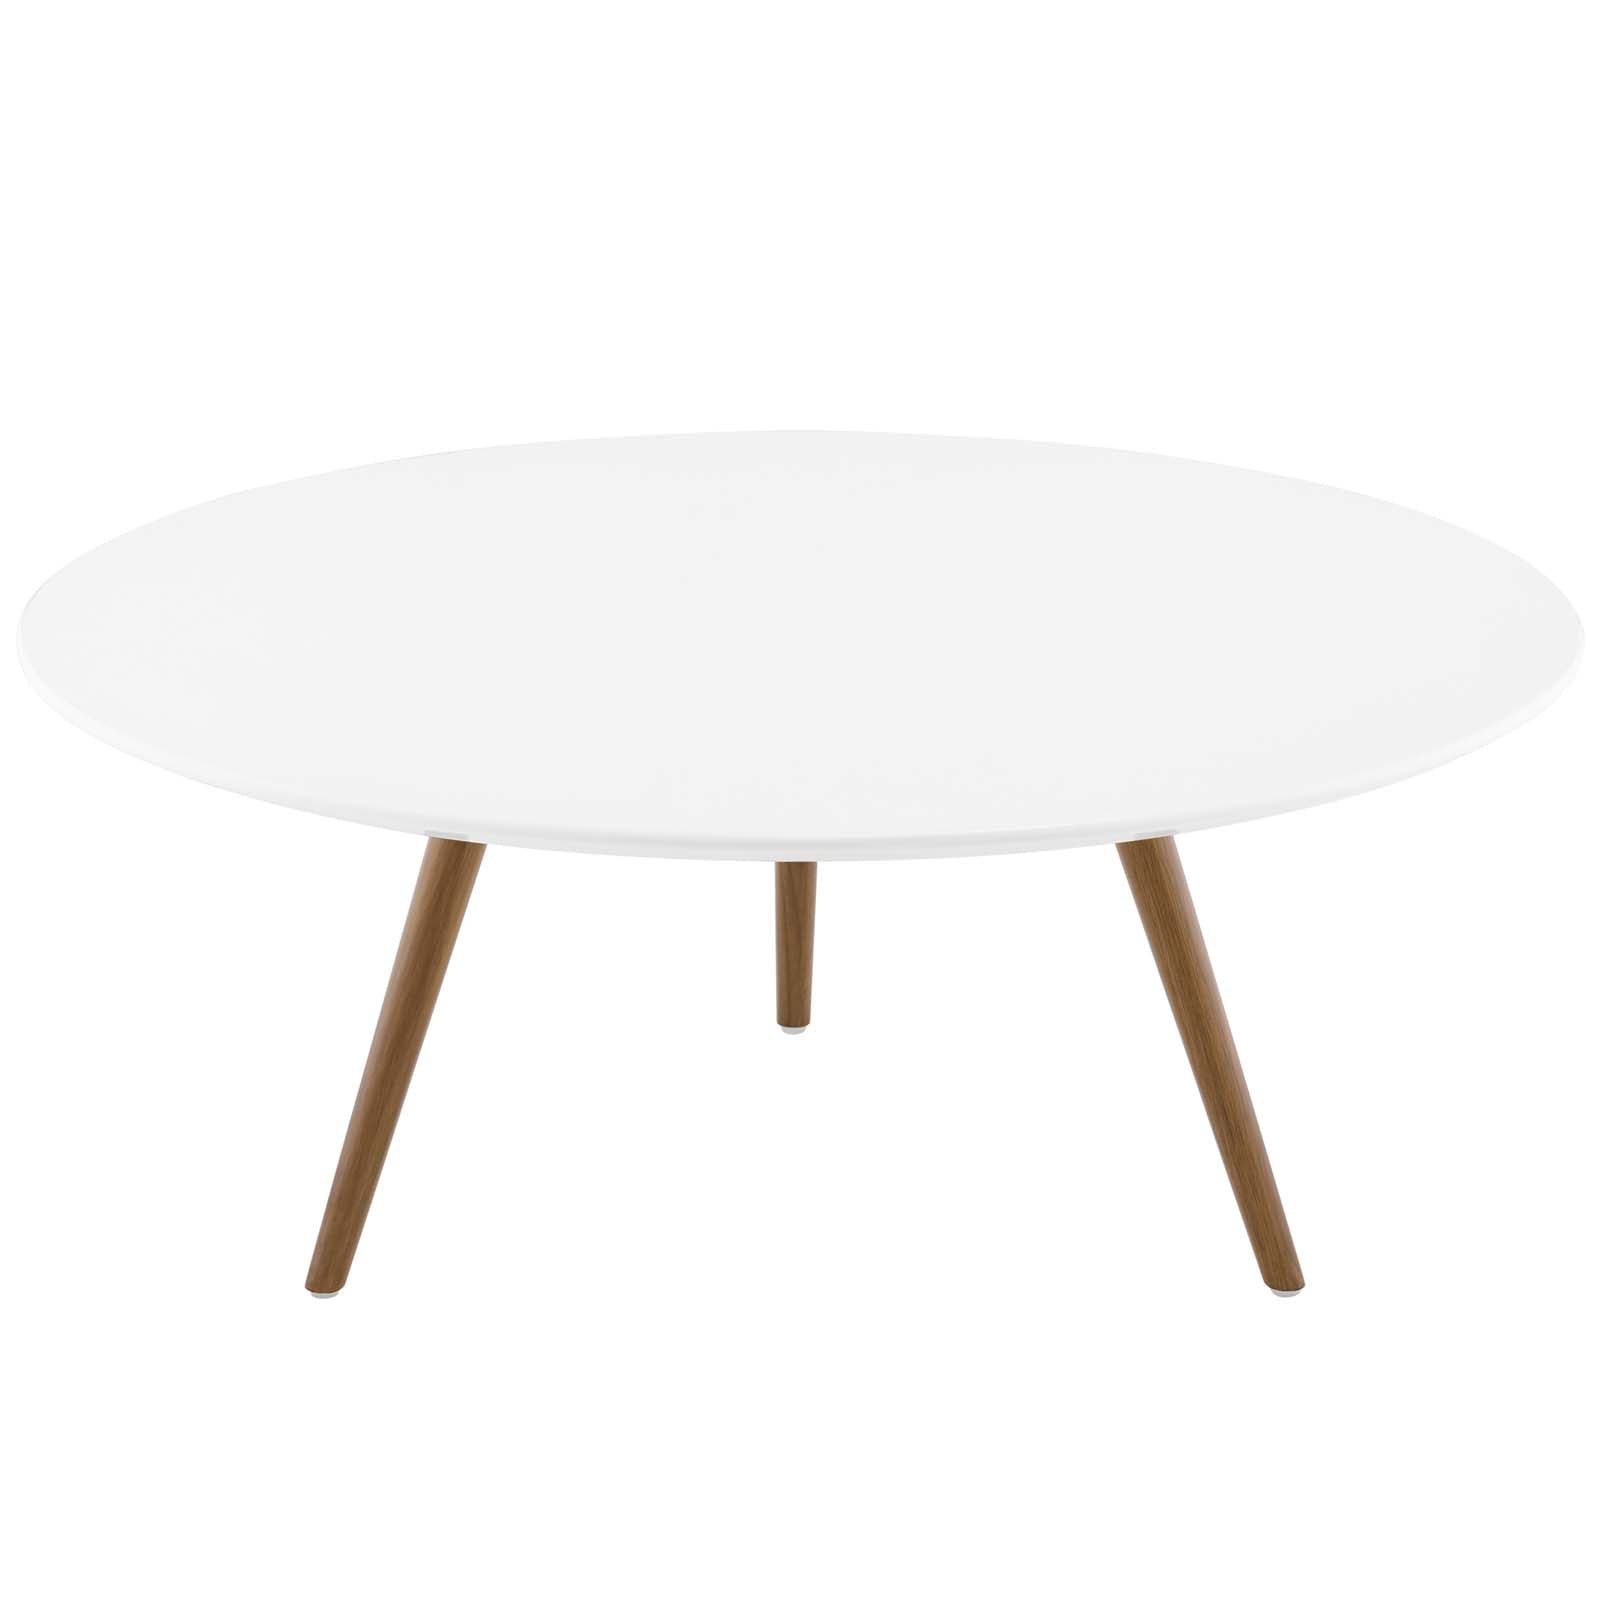 Lippa 36" Round Wood Top Coffee Table with Tripod Base